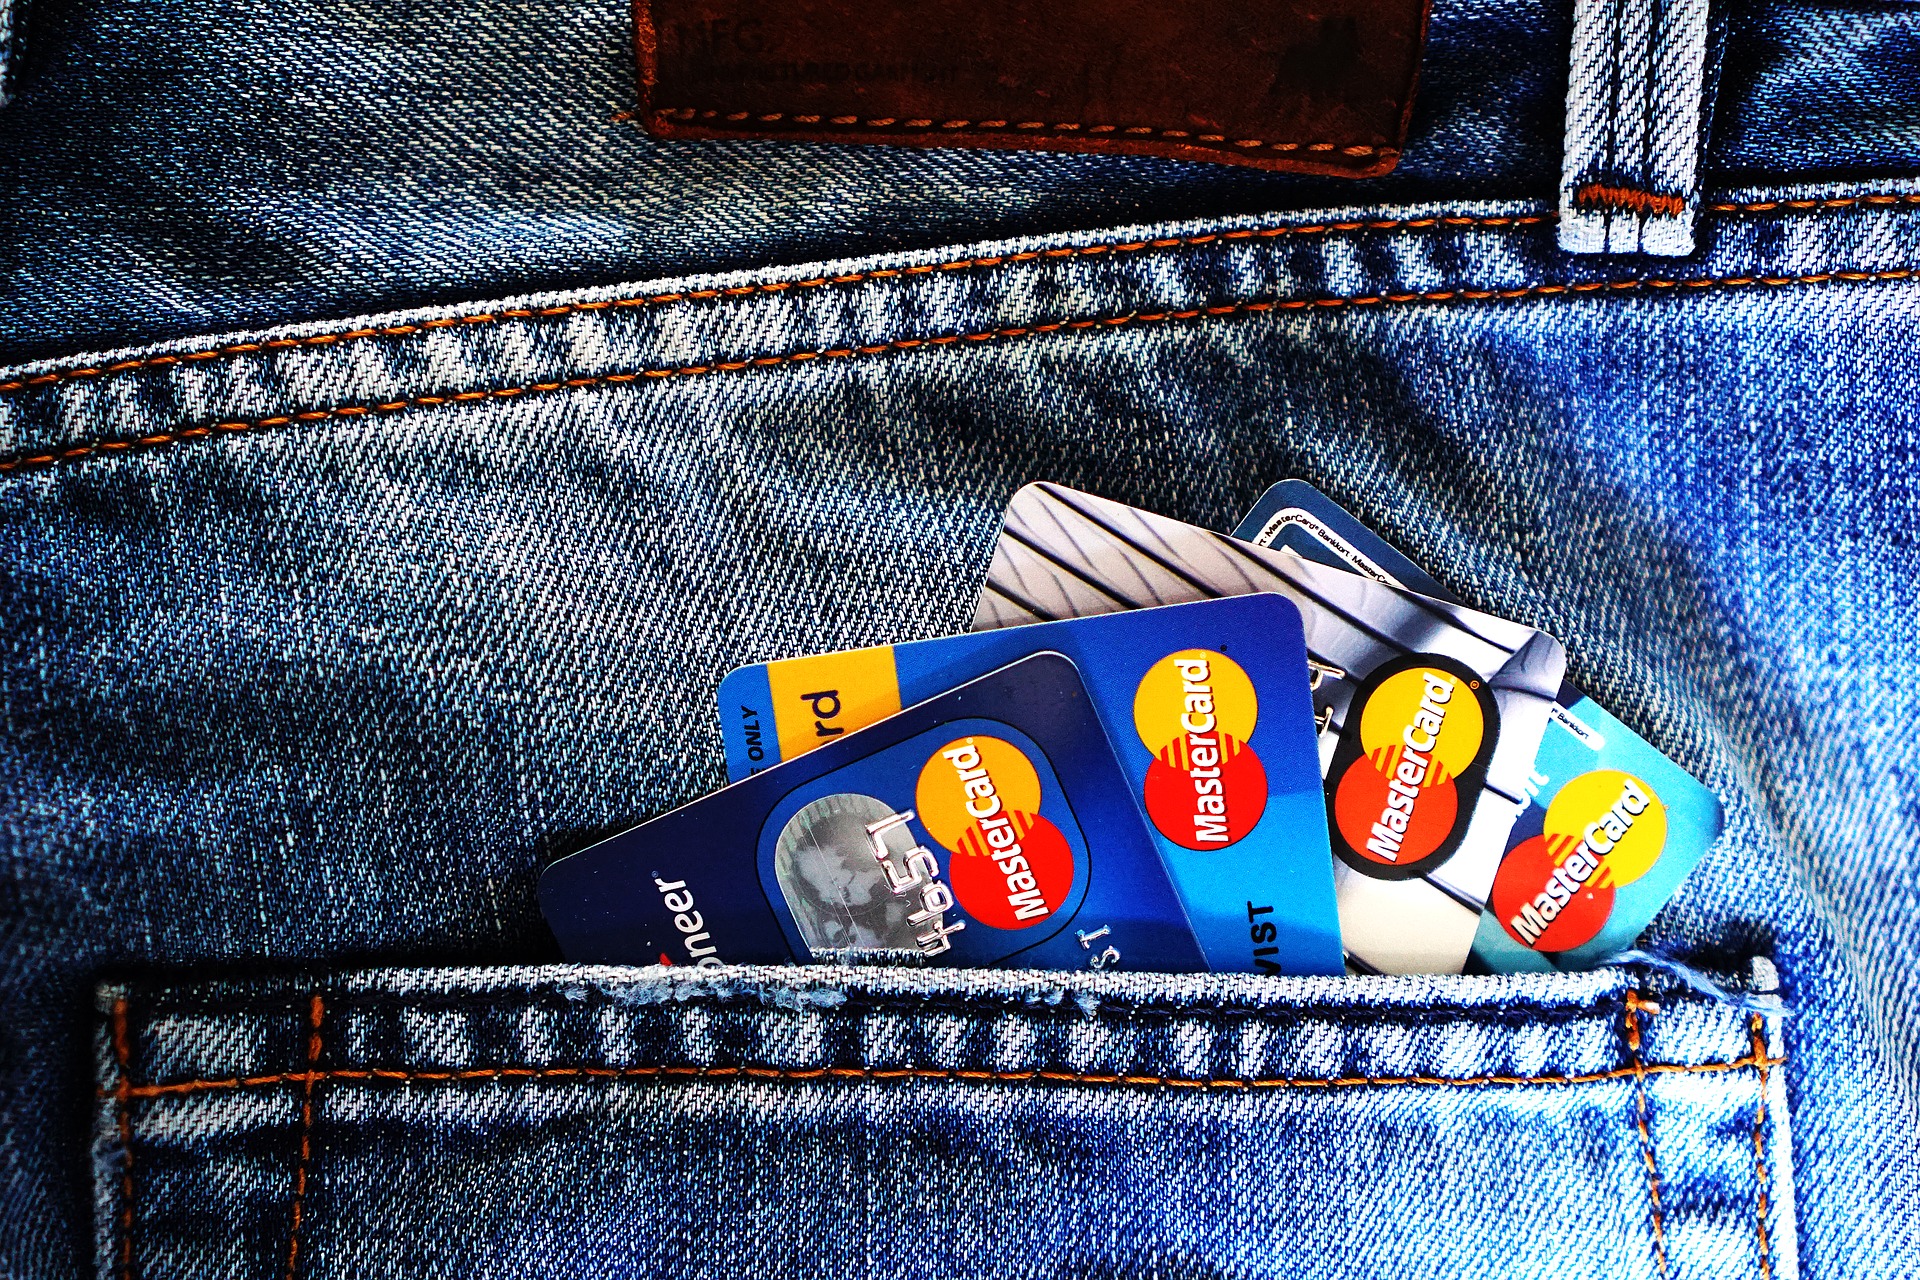 Credit card insurance fraud